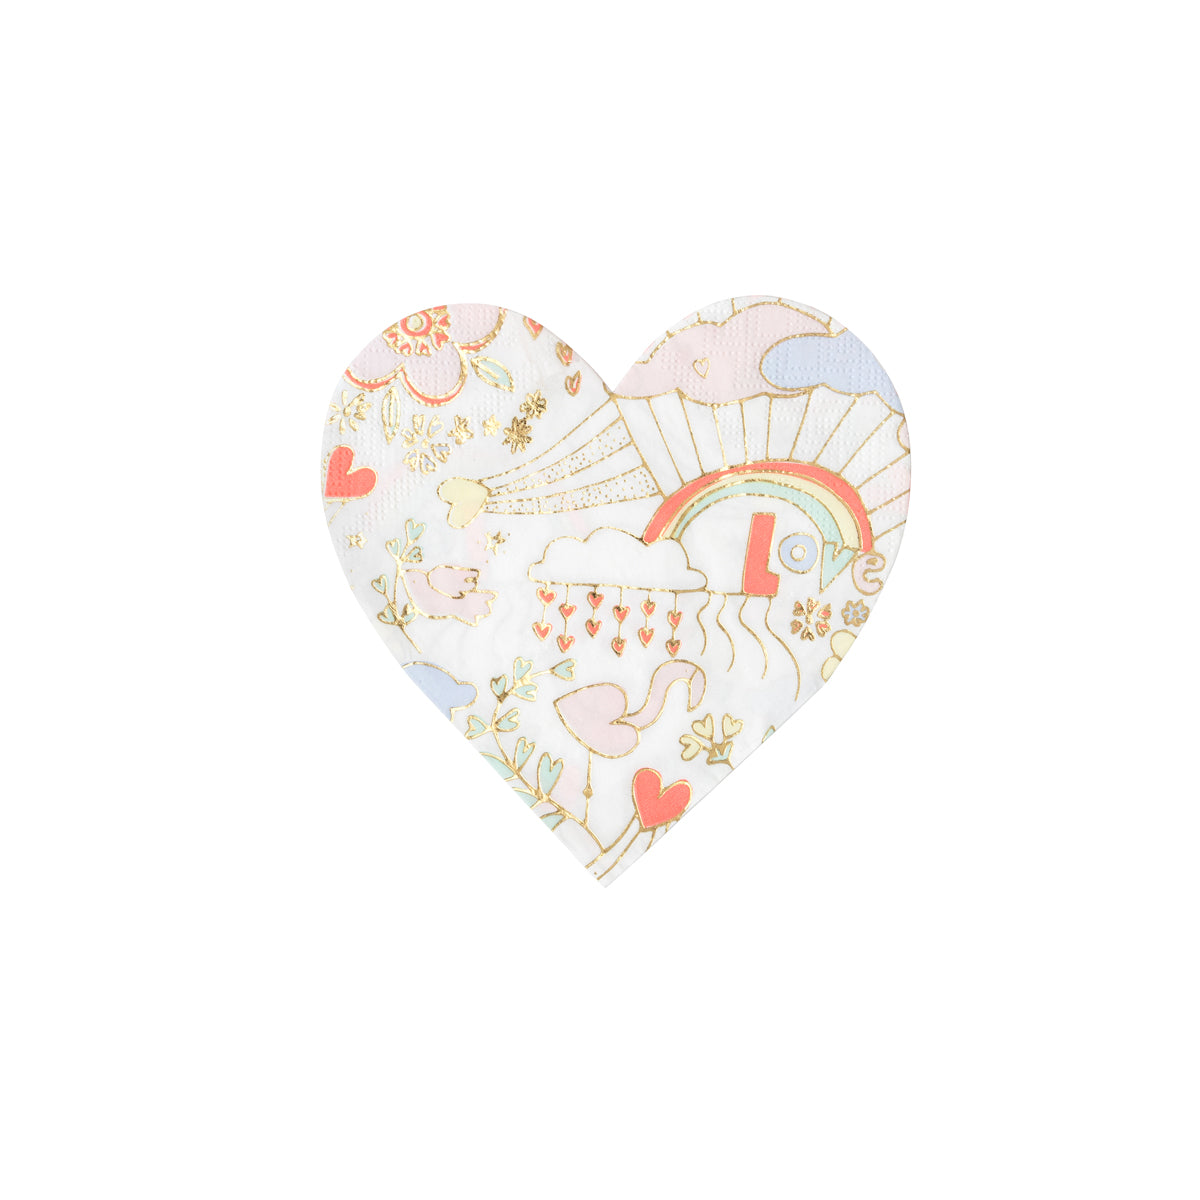 Meri Meri Valentine Doodle Small napkins pack of 16